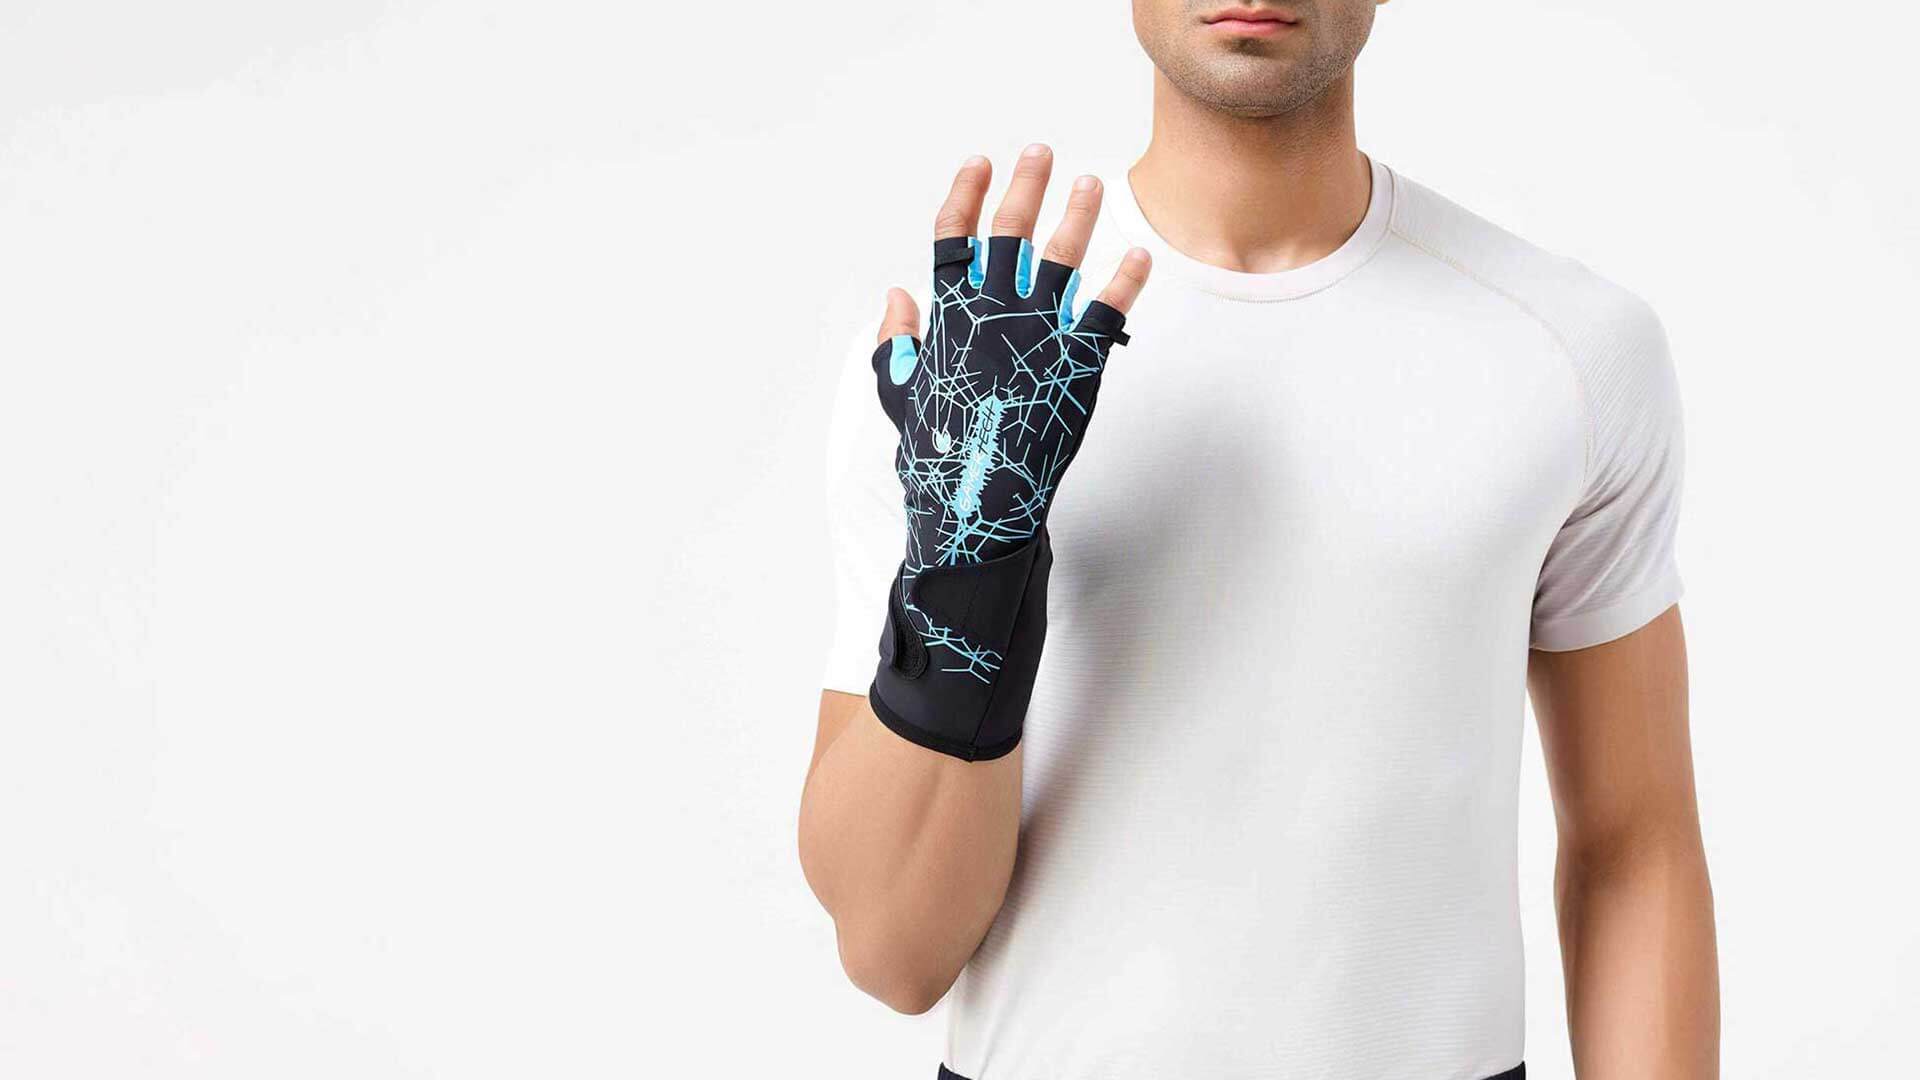 Sub-Zero Glove